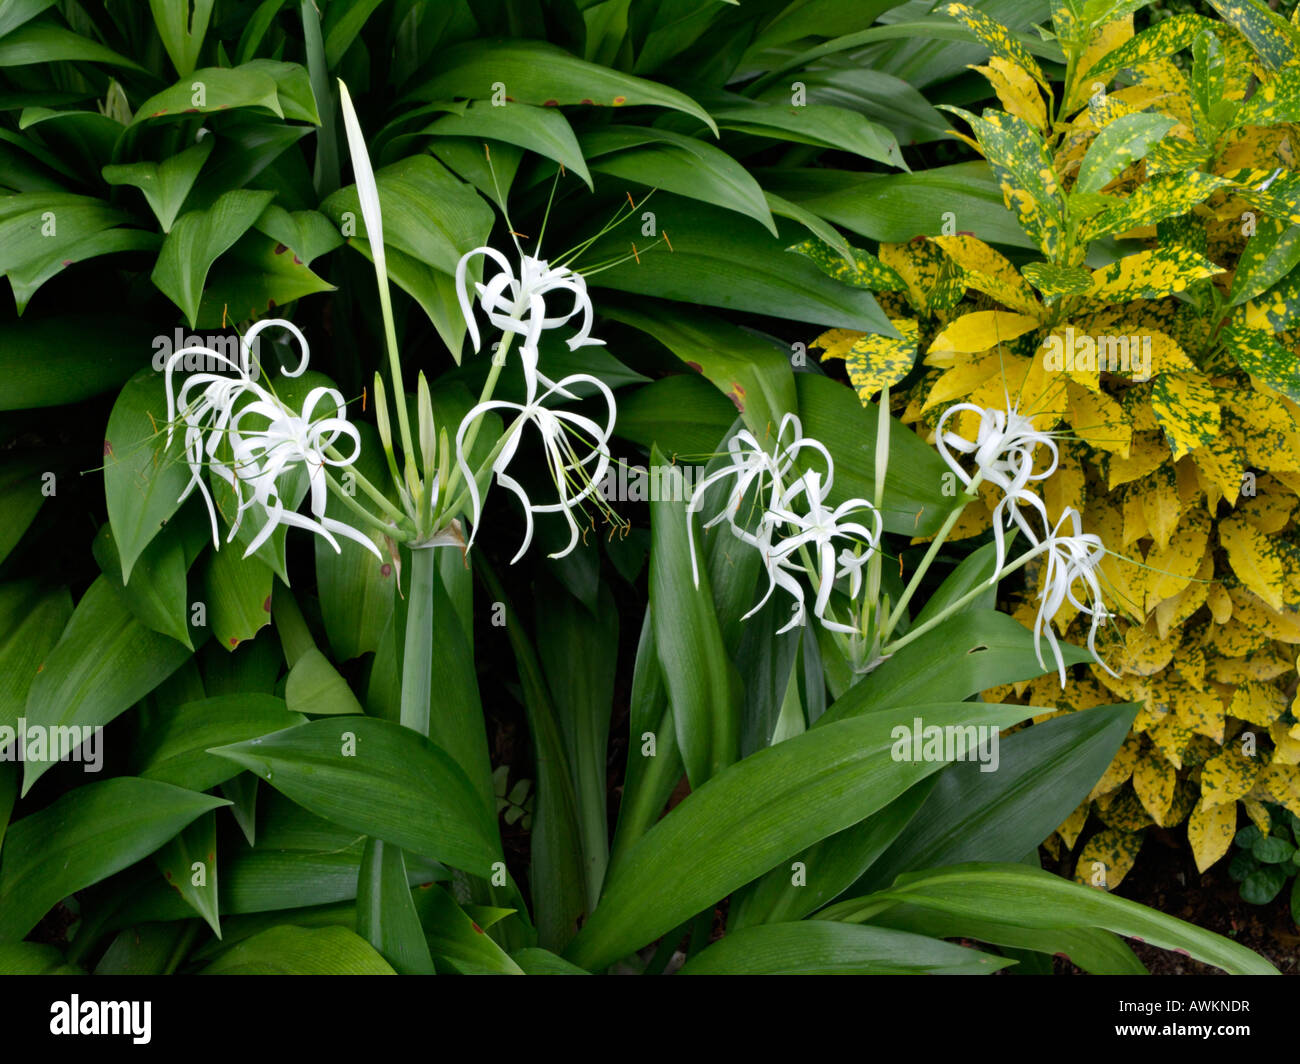 Spider lily (Hymenocallis) and croton (Codiaeum variegatum syn. Croton variegatus) Stock Photo